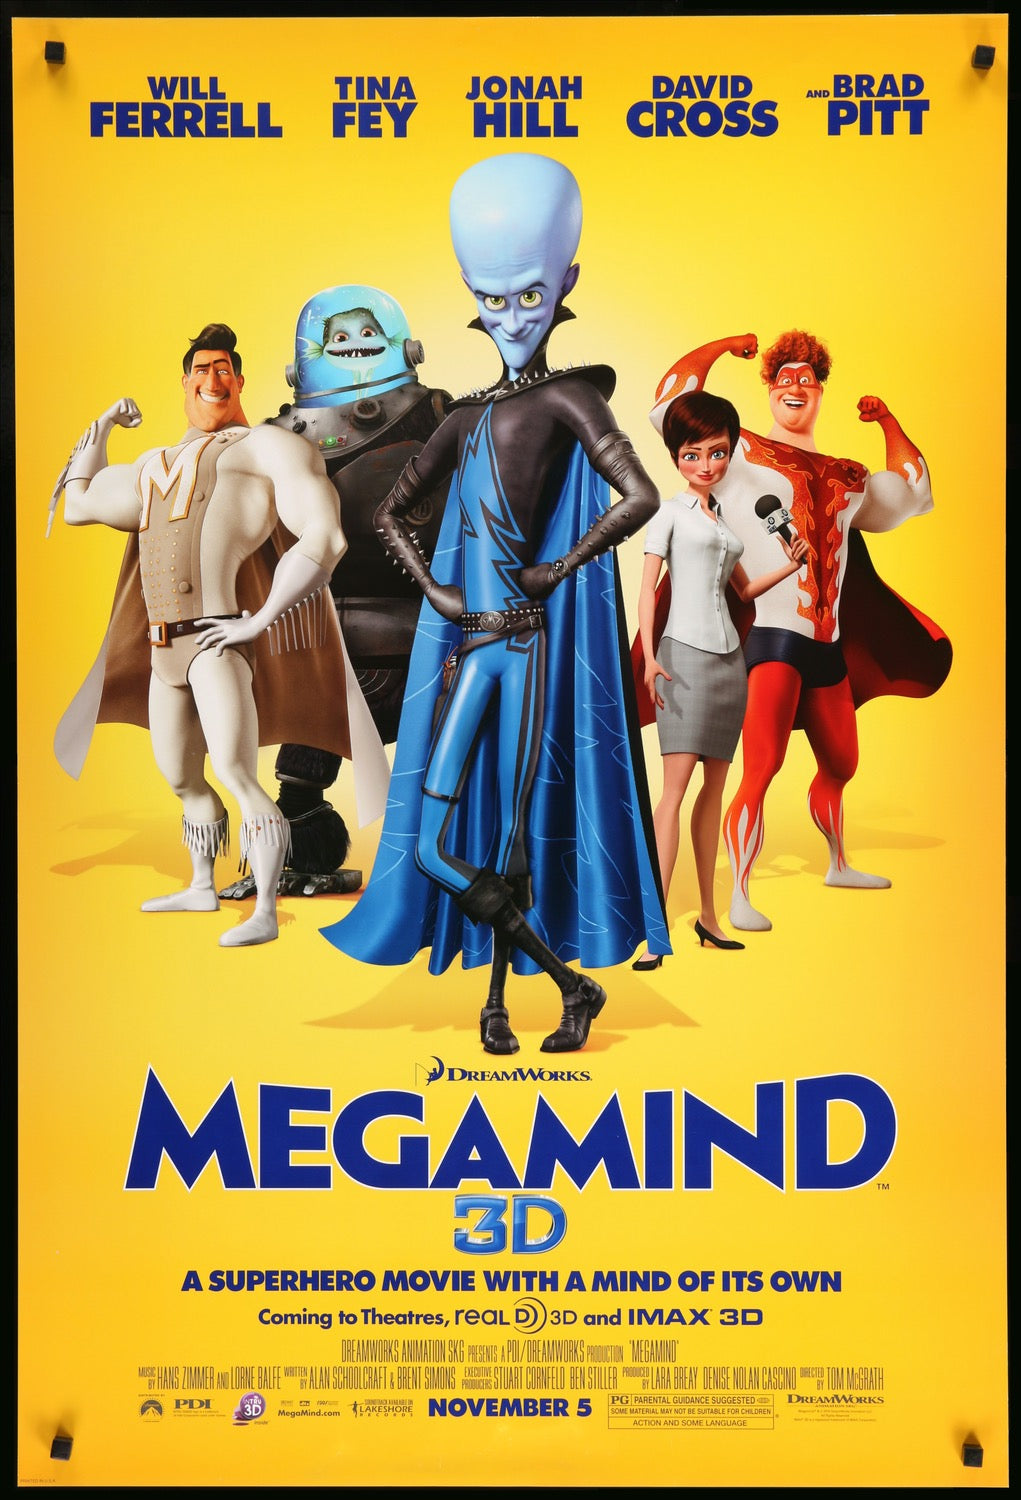 Megamind (2010) original movie poster for sale at Original Film Art